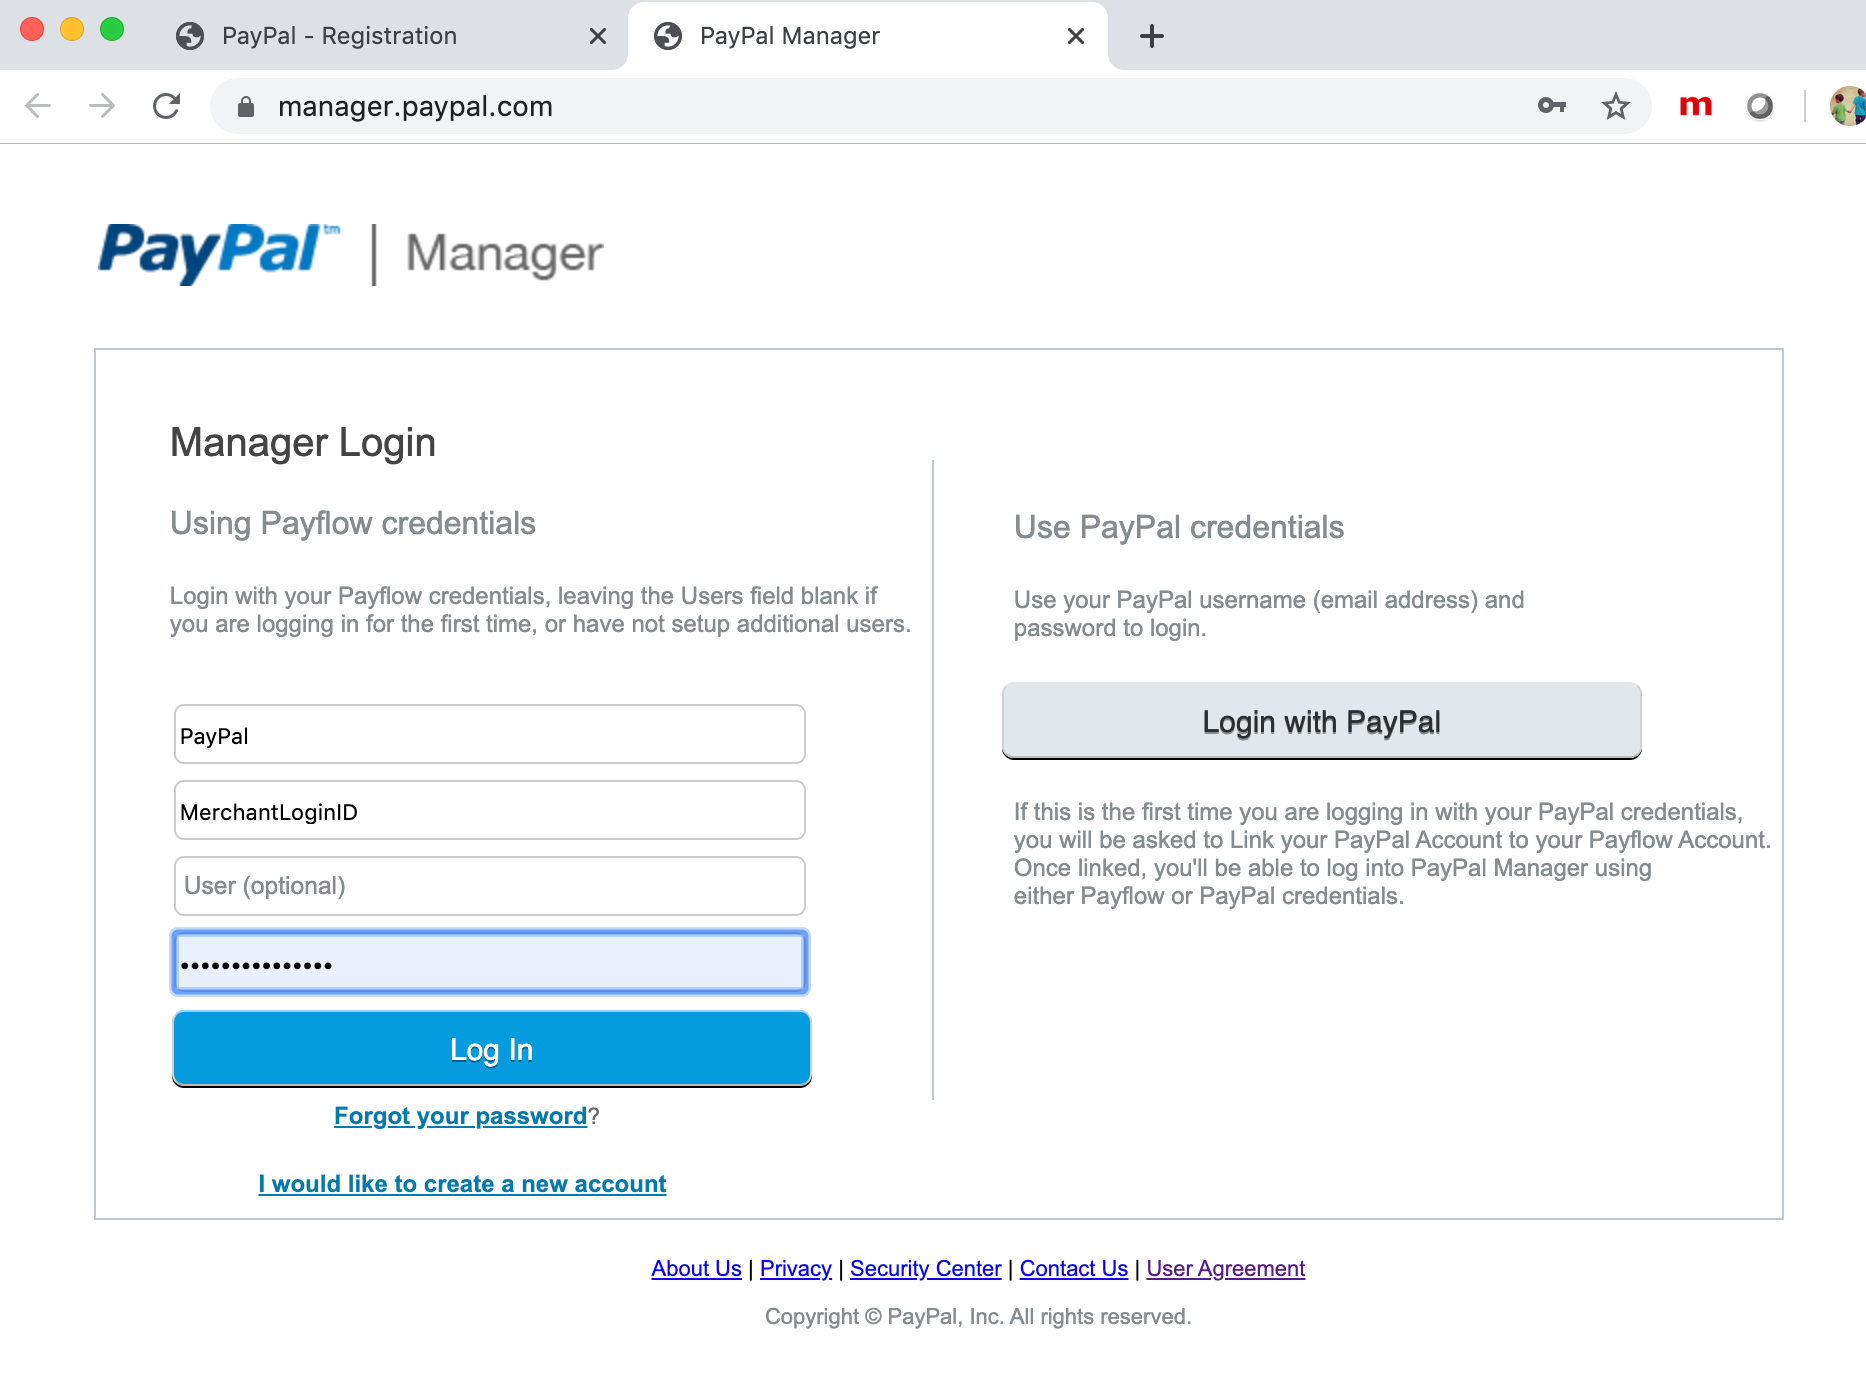 PayPal Manager login